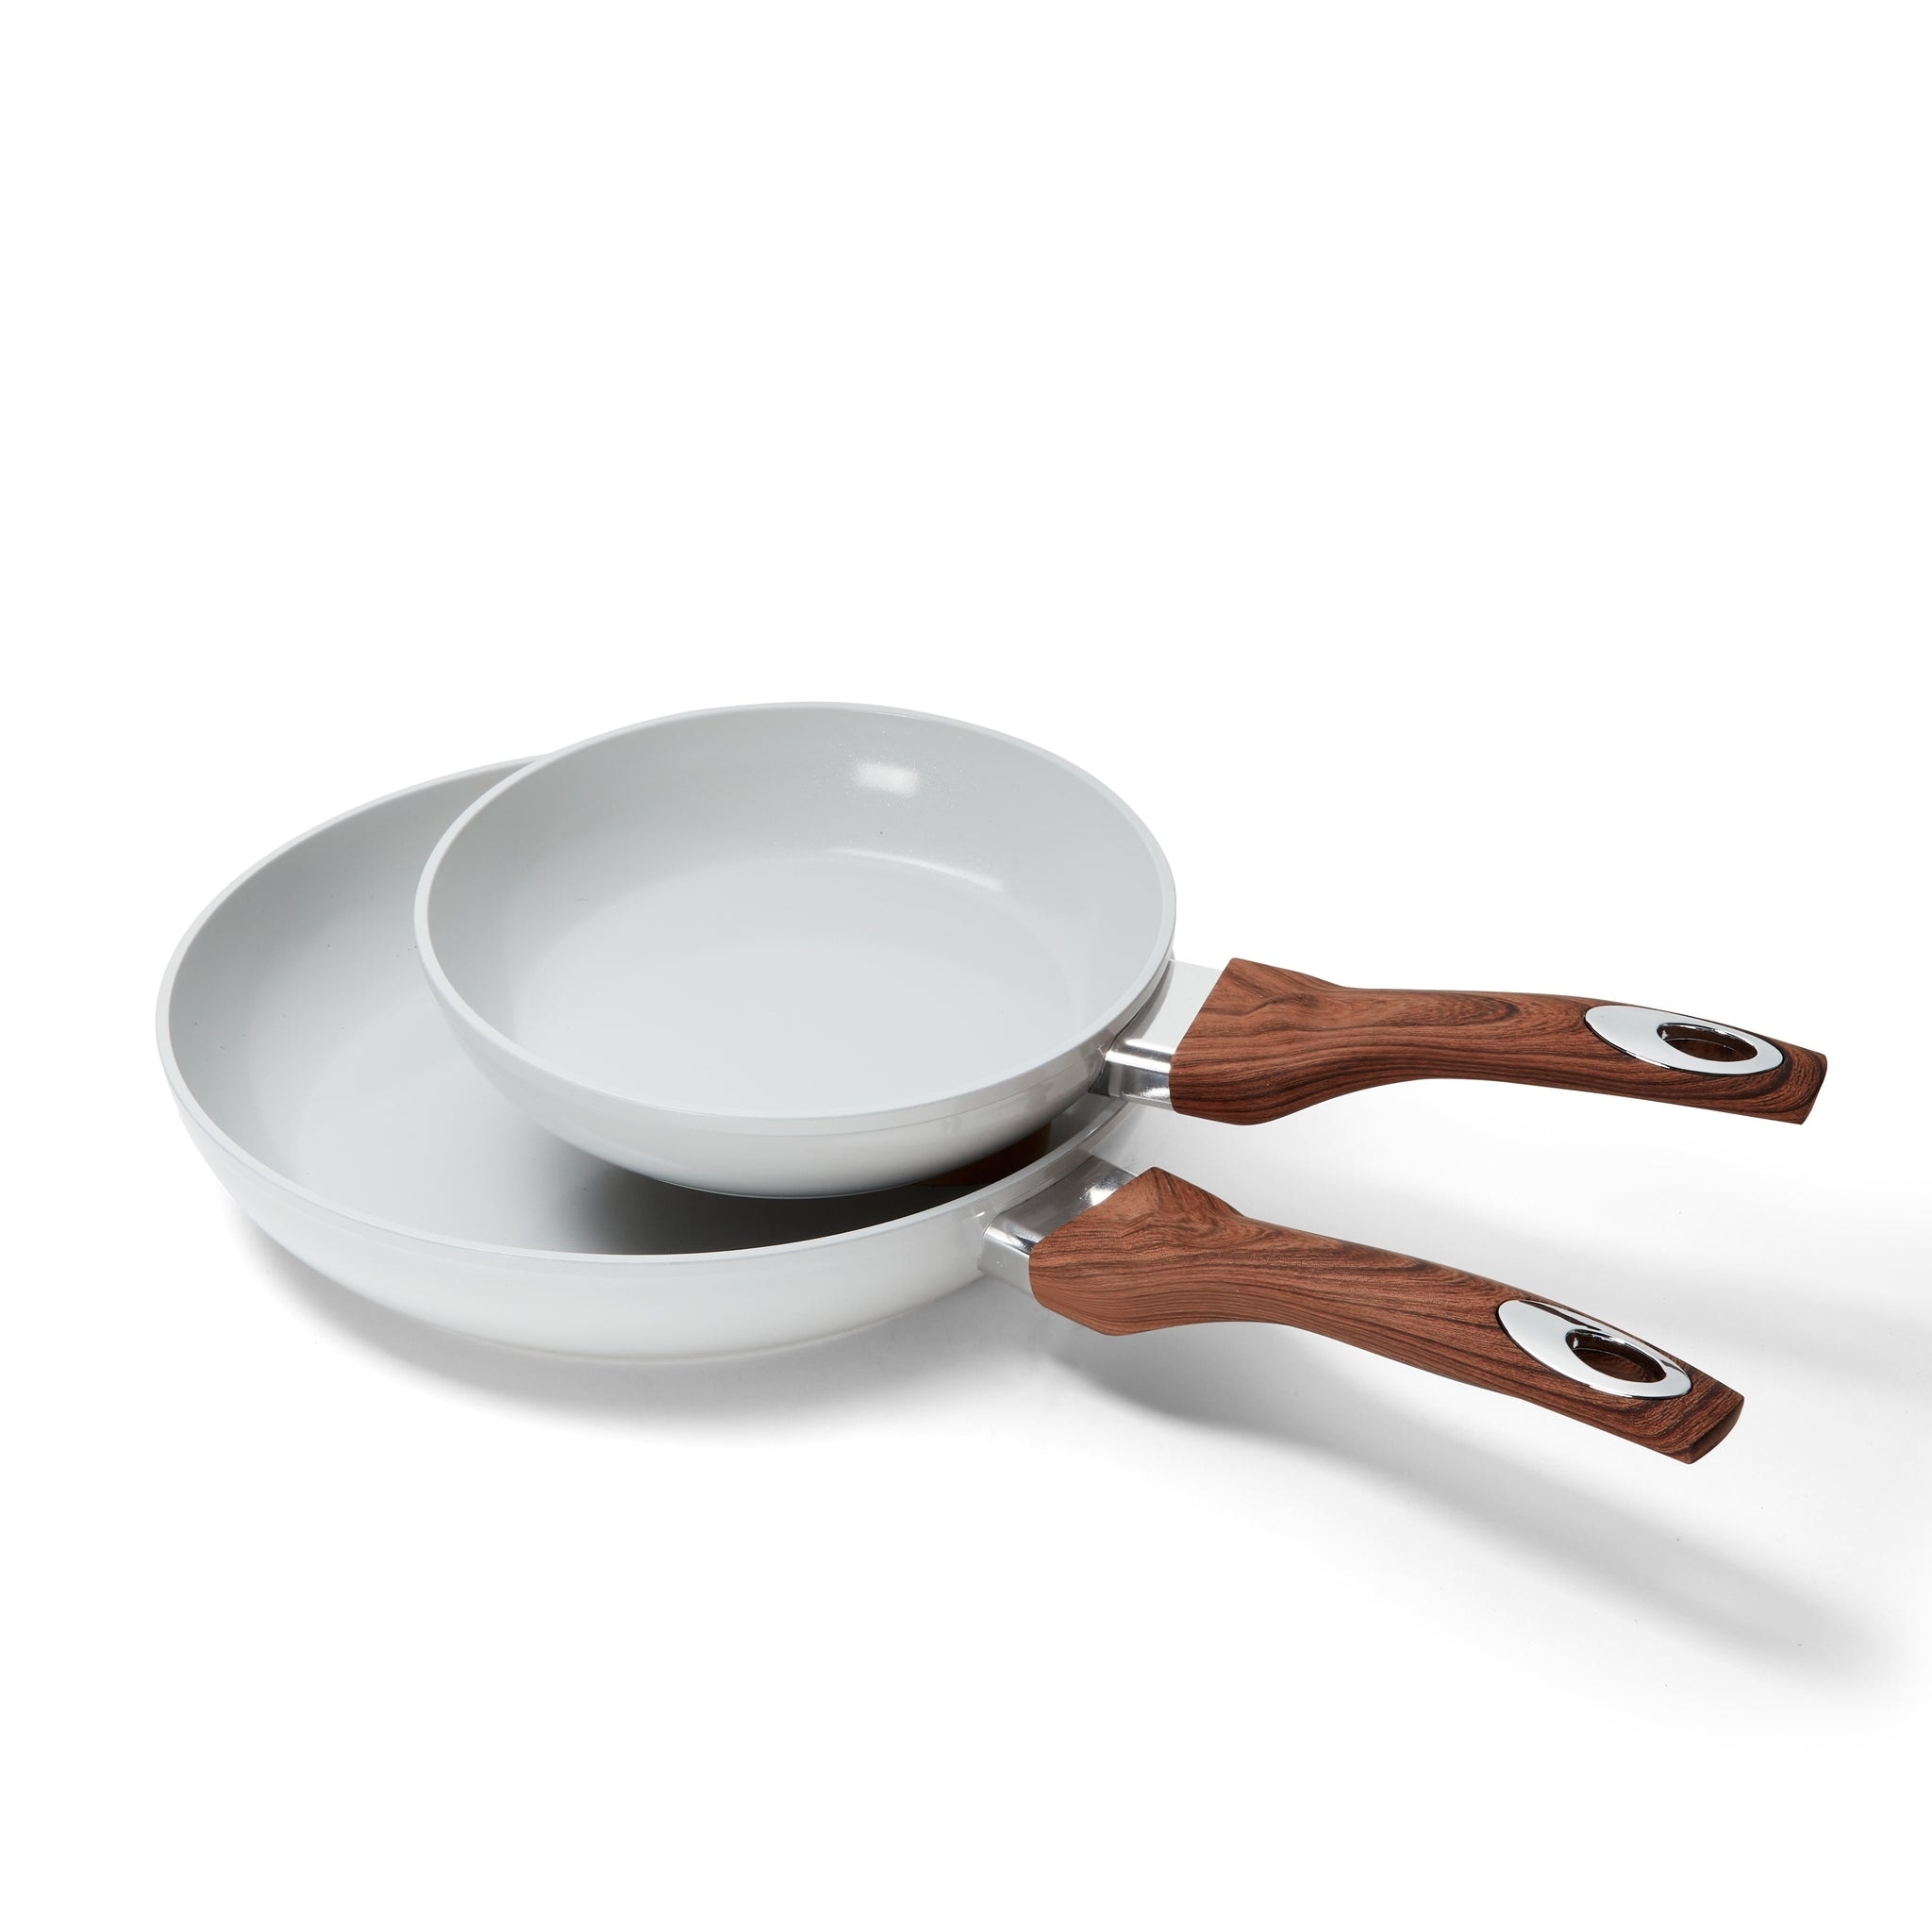 Phantom Chef-Hard Anodized Cookware Set LIds Pots Pans Fry Skillet Non stick